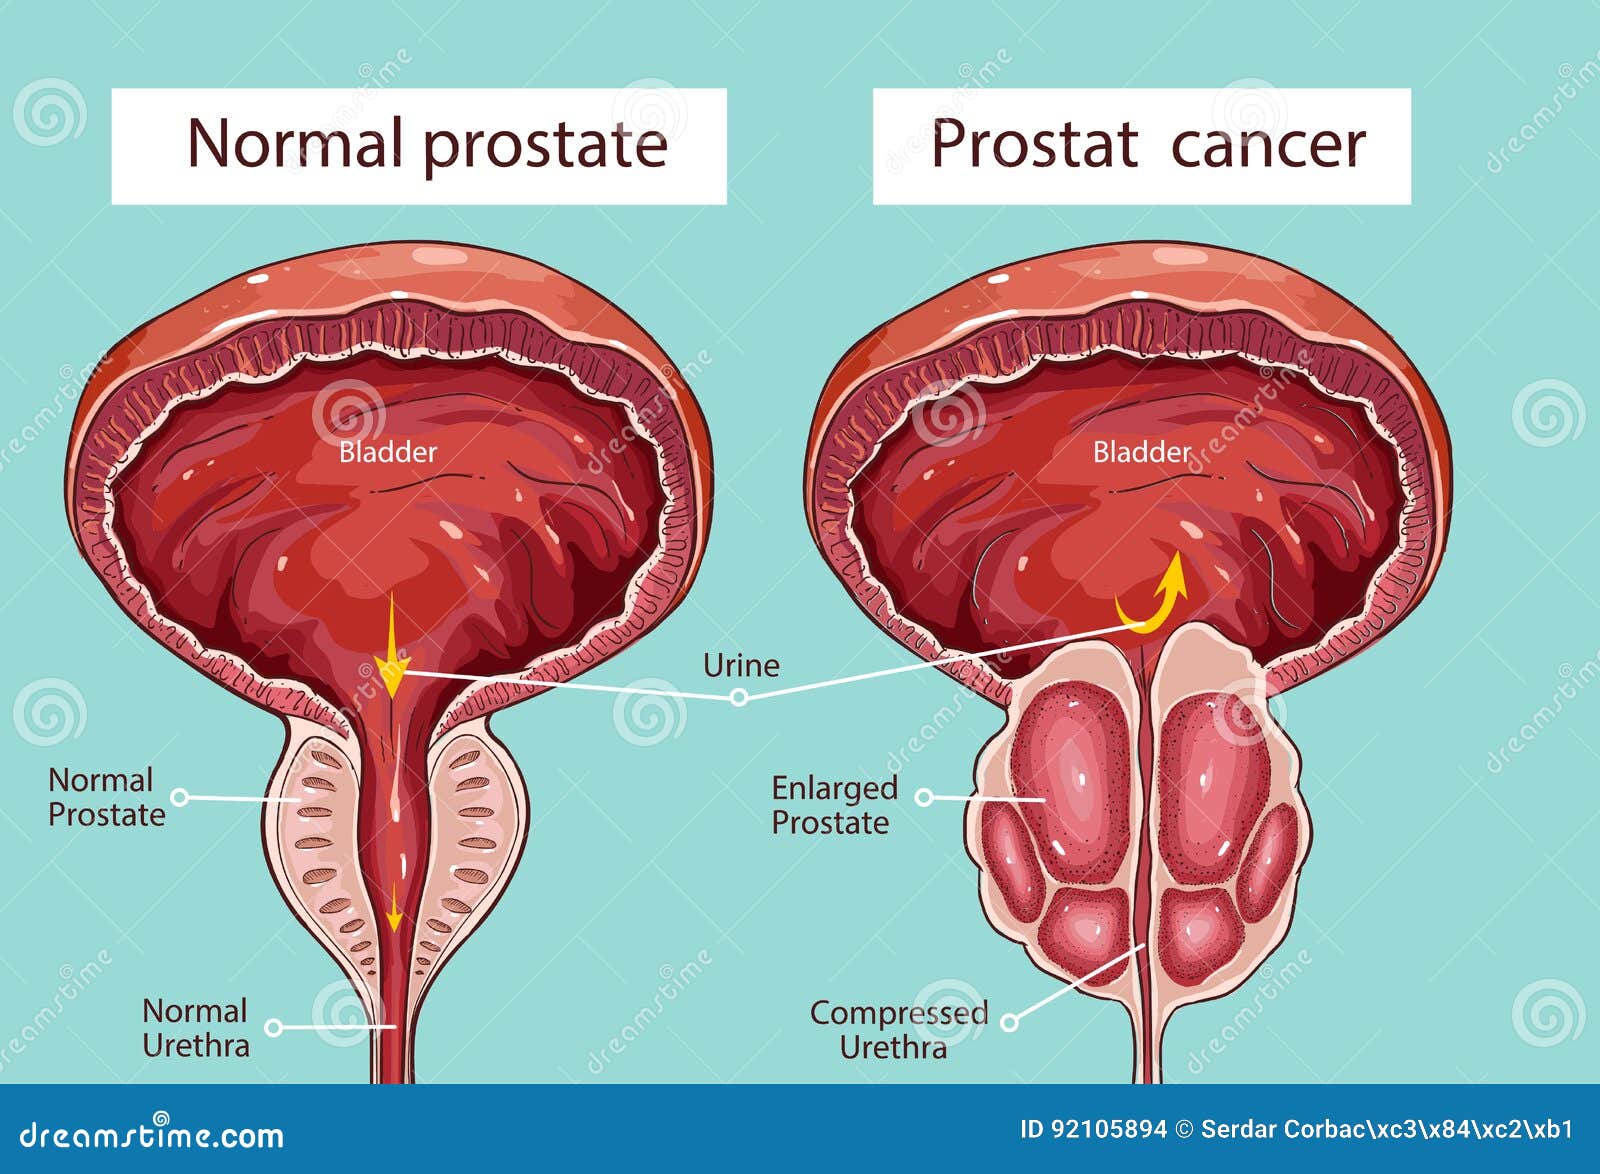 acute prostatitis and prostate cancer)